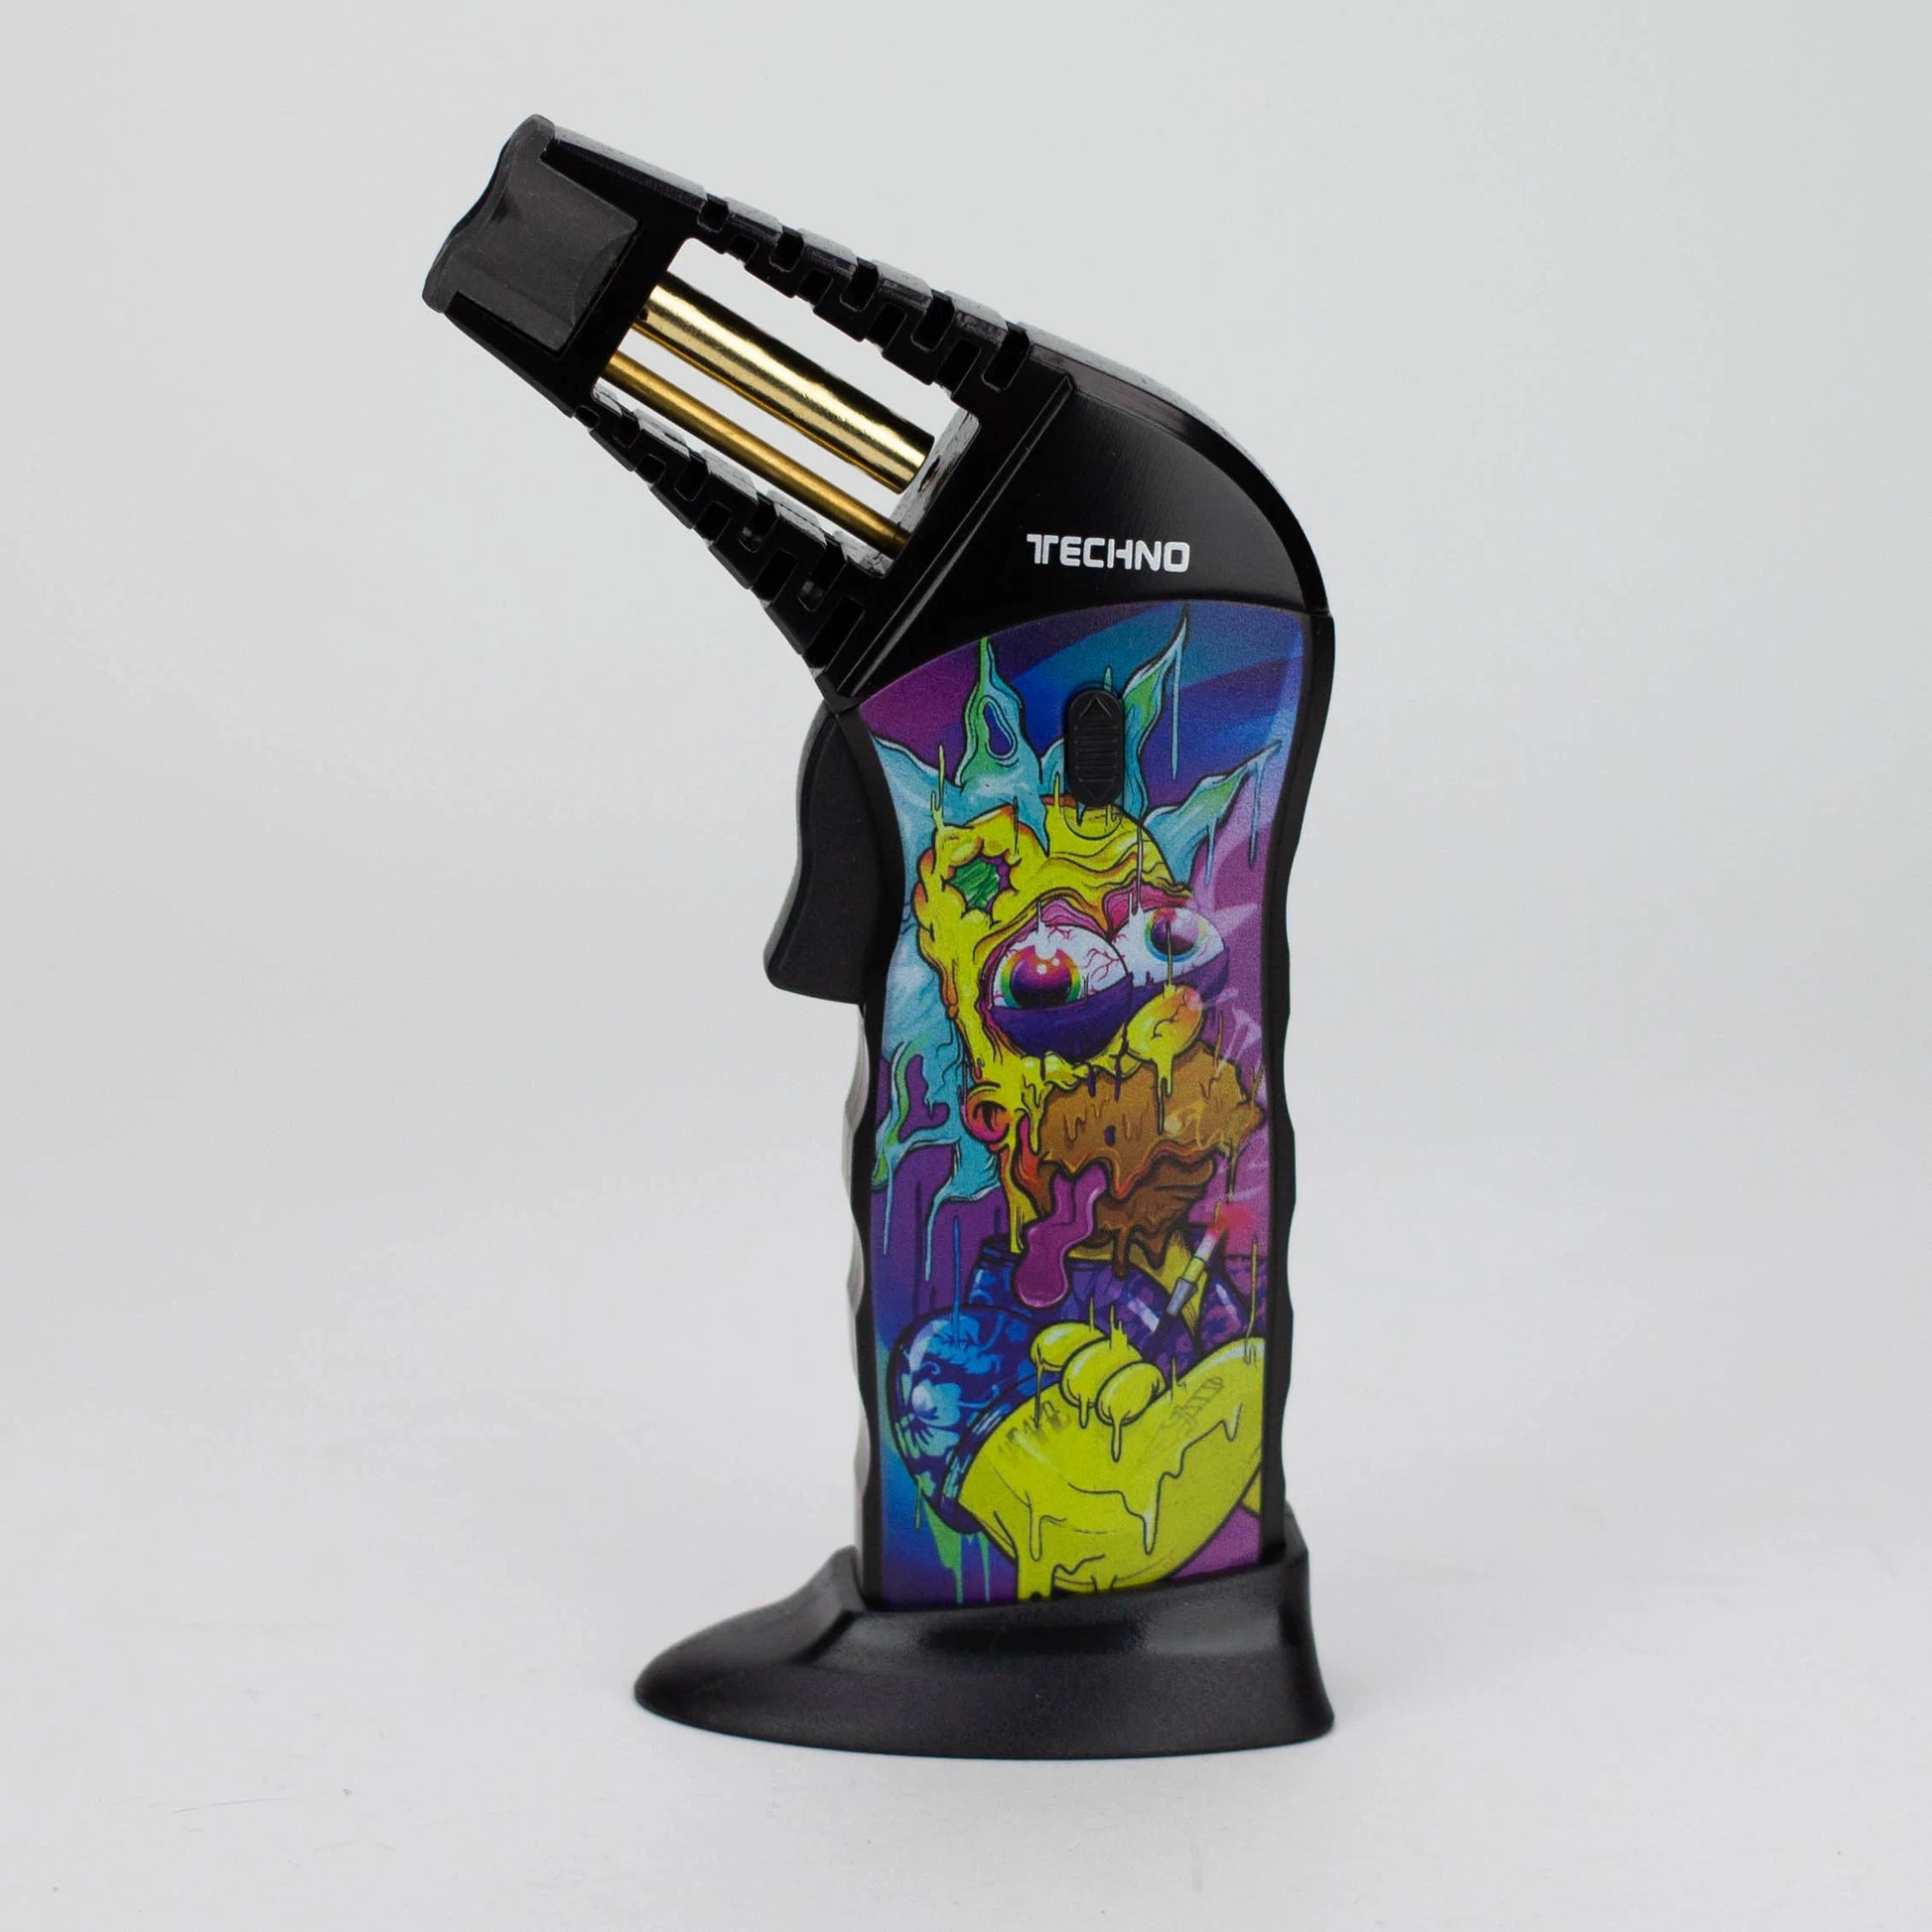 Techno | Adjustable Single Jet slant Torch Lighter in gift box [15811]_7